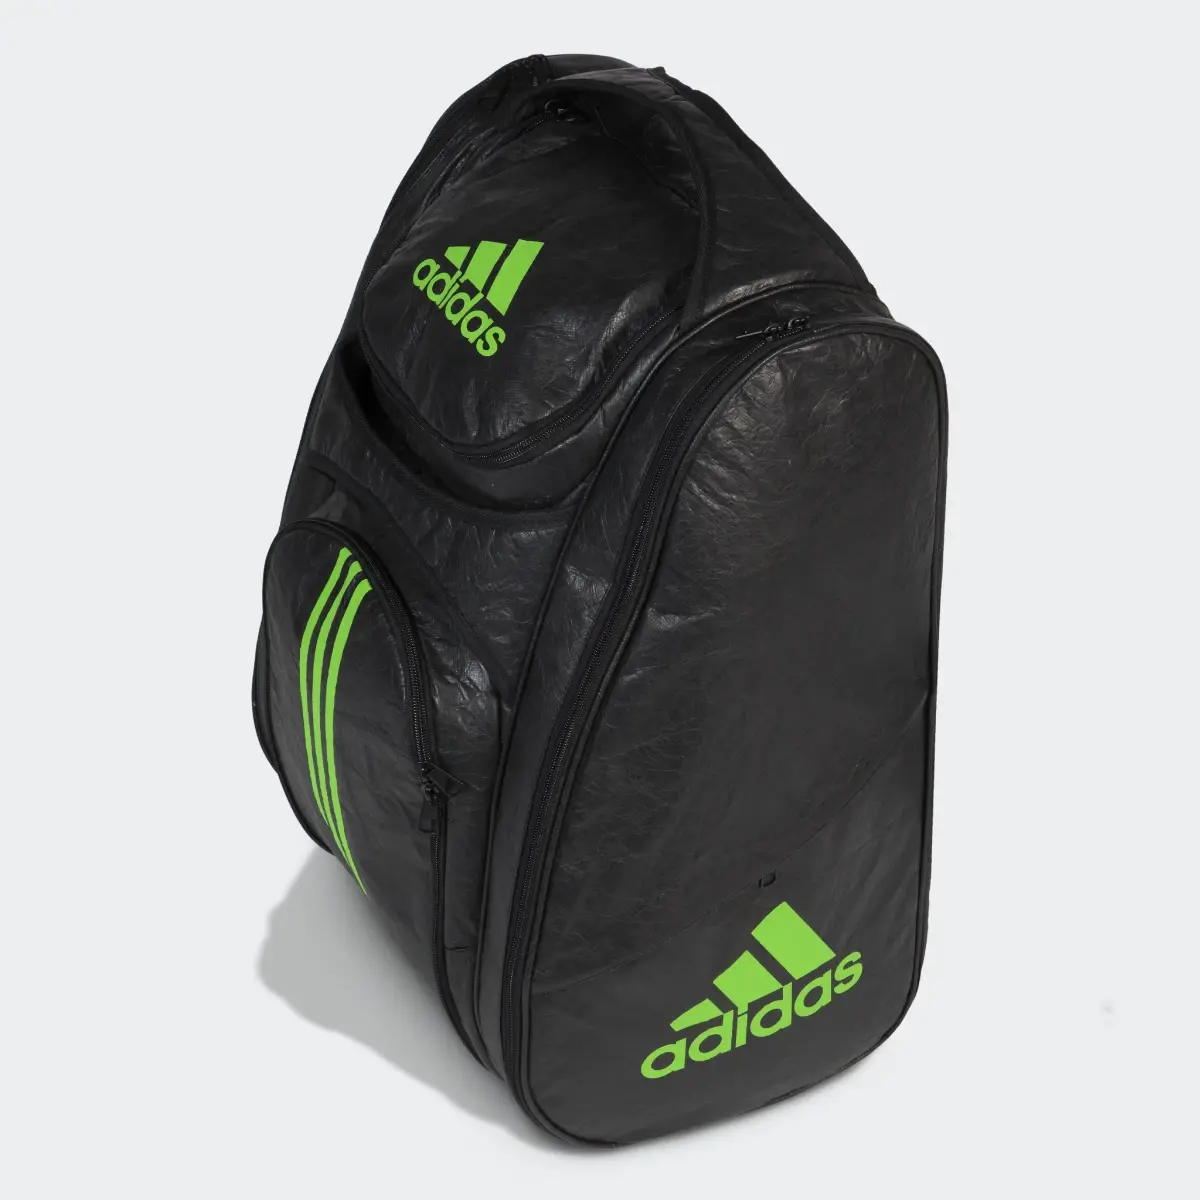 Adidas Multigame Racket Bag. 1